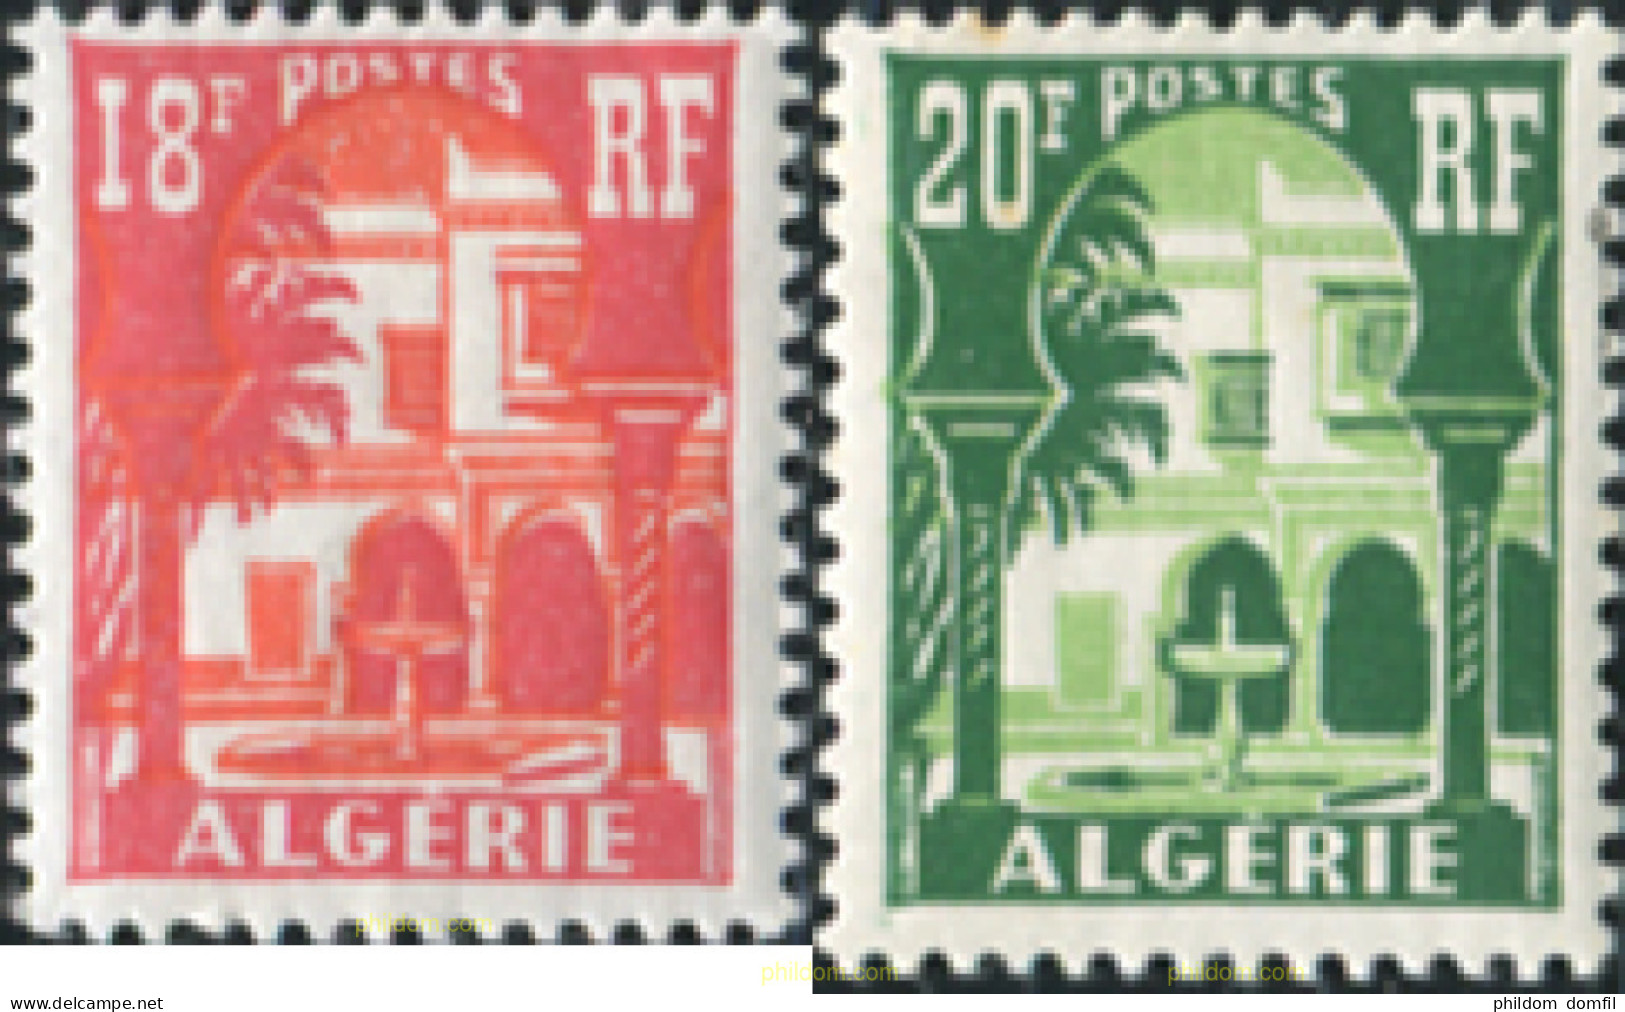 724293 HINGED ARGELIA 1956 MUSEO - Argelia (1962-...)